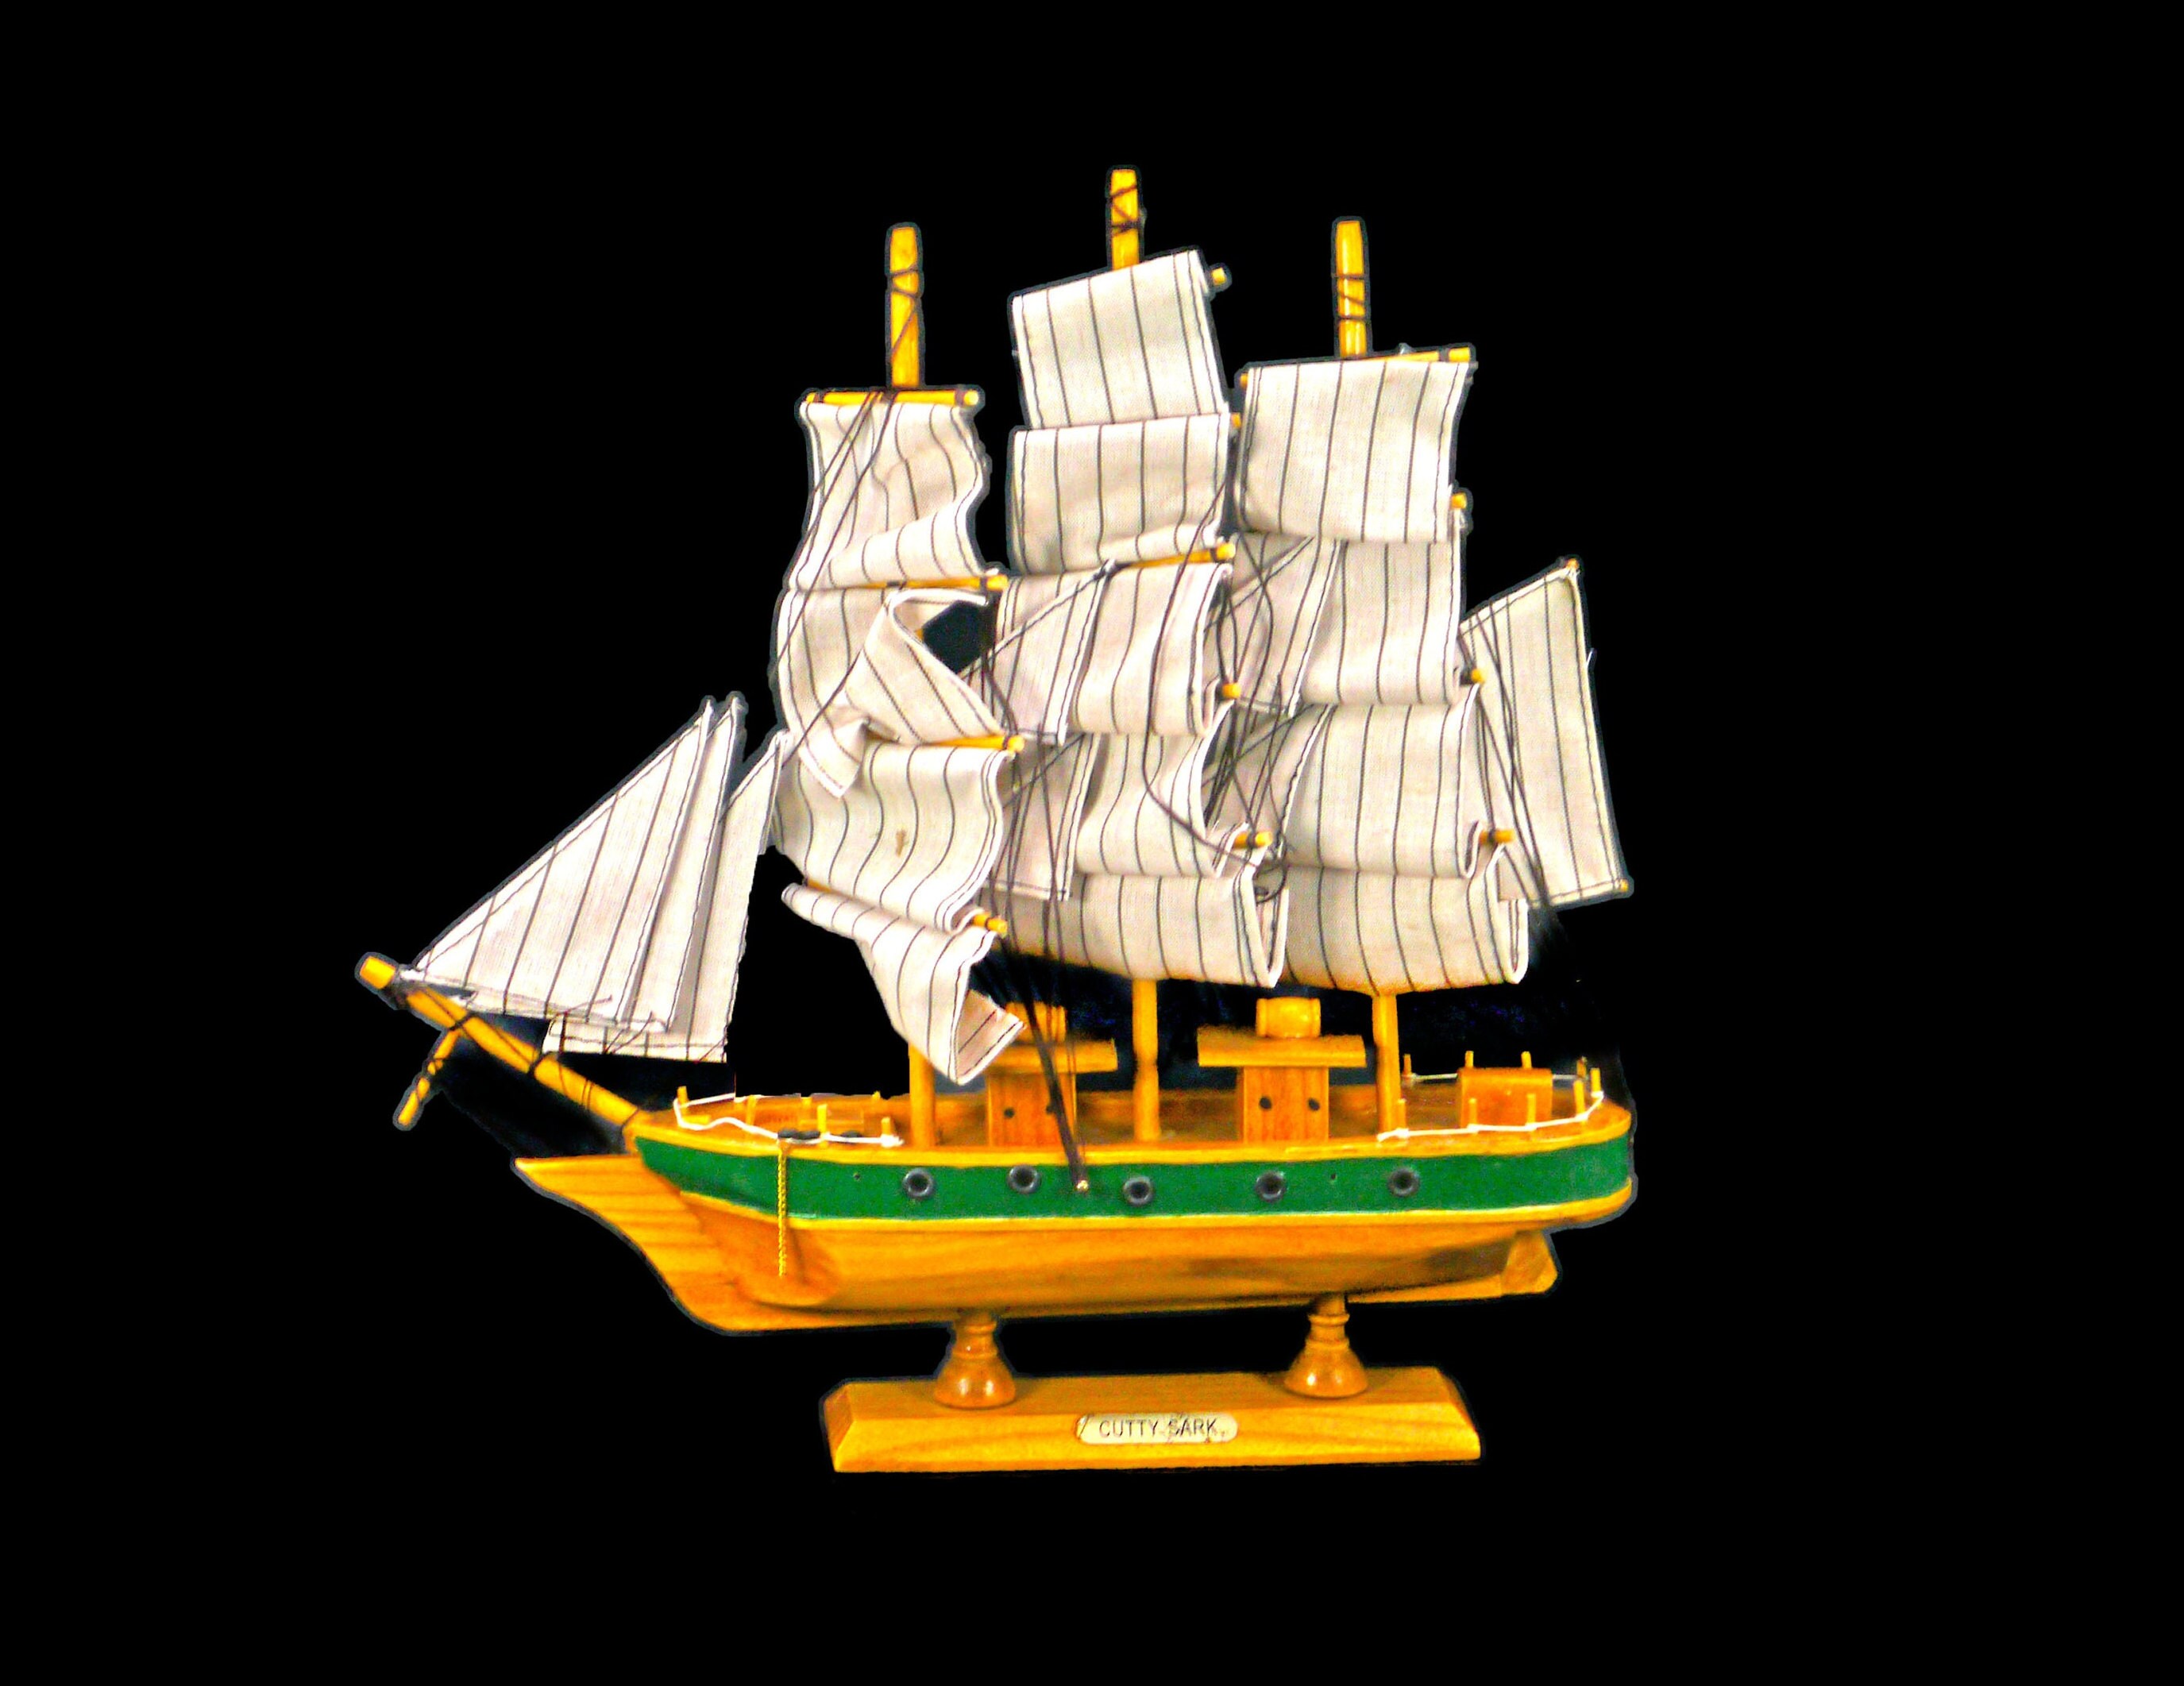 Cutty Sark 7" Small Model Ship Replica Wood Model Ship Model Boat For Kids 